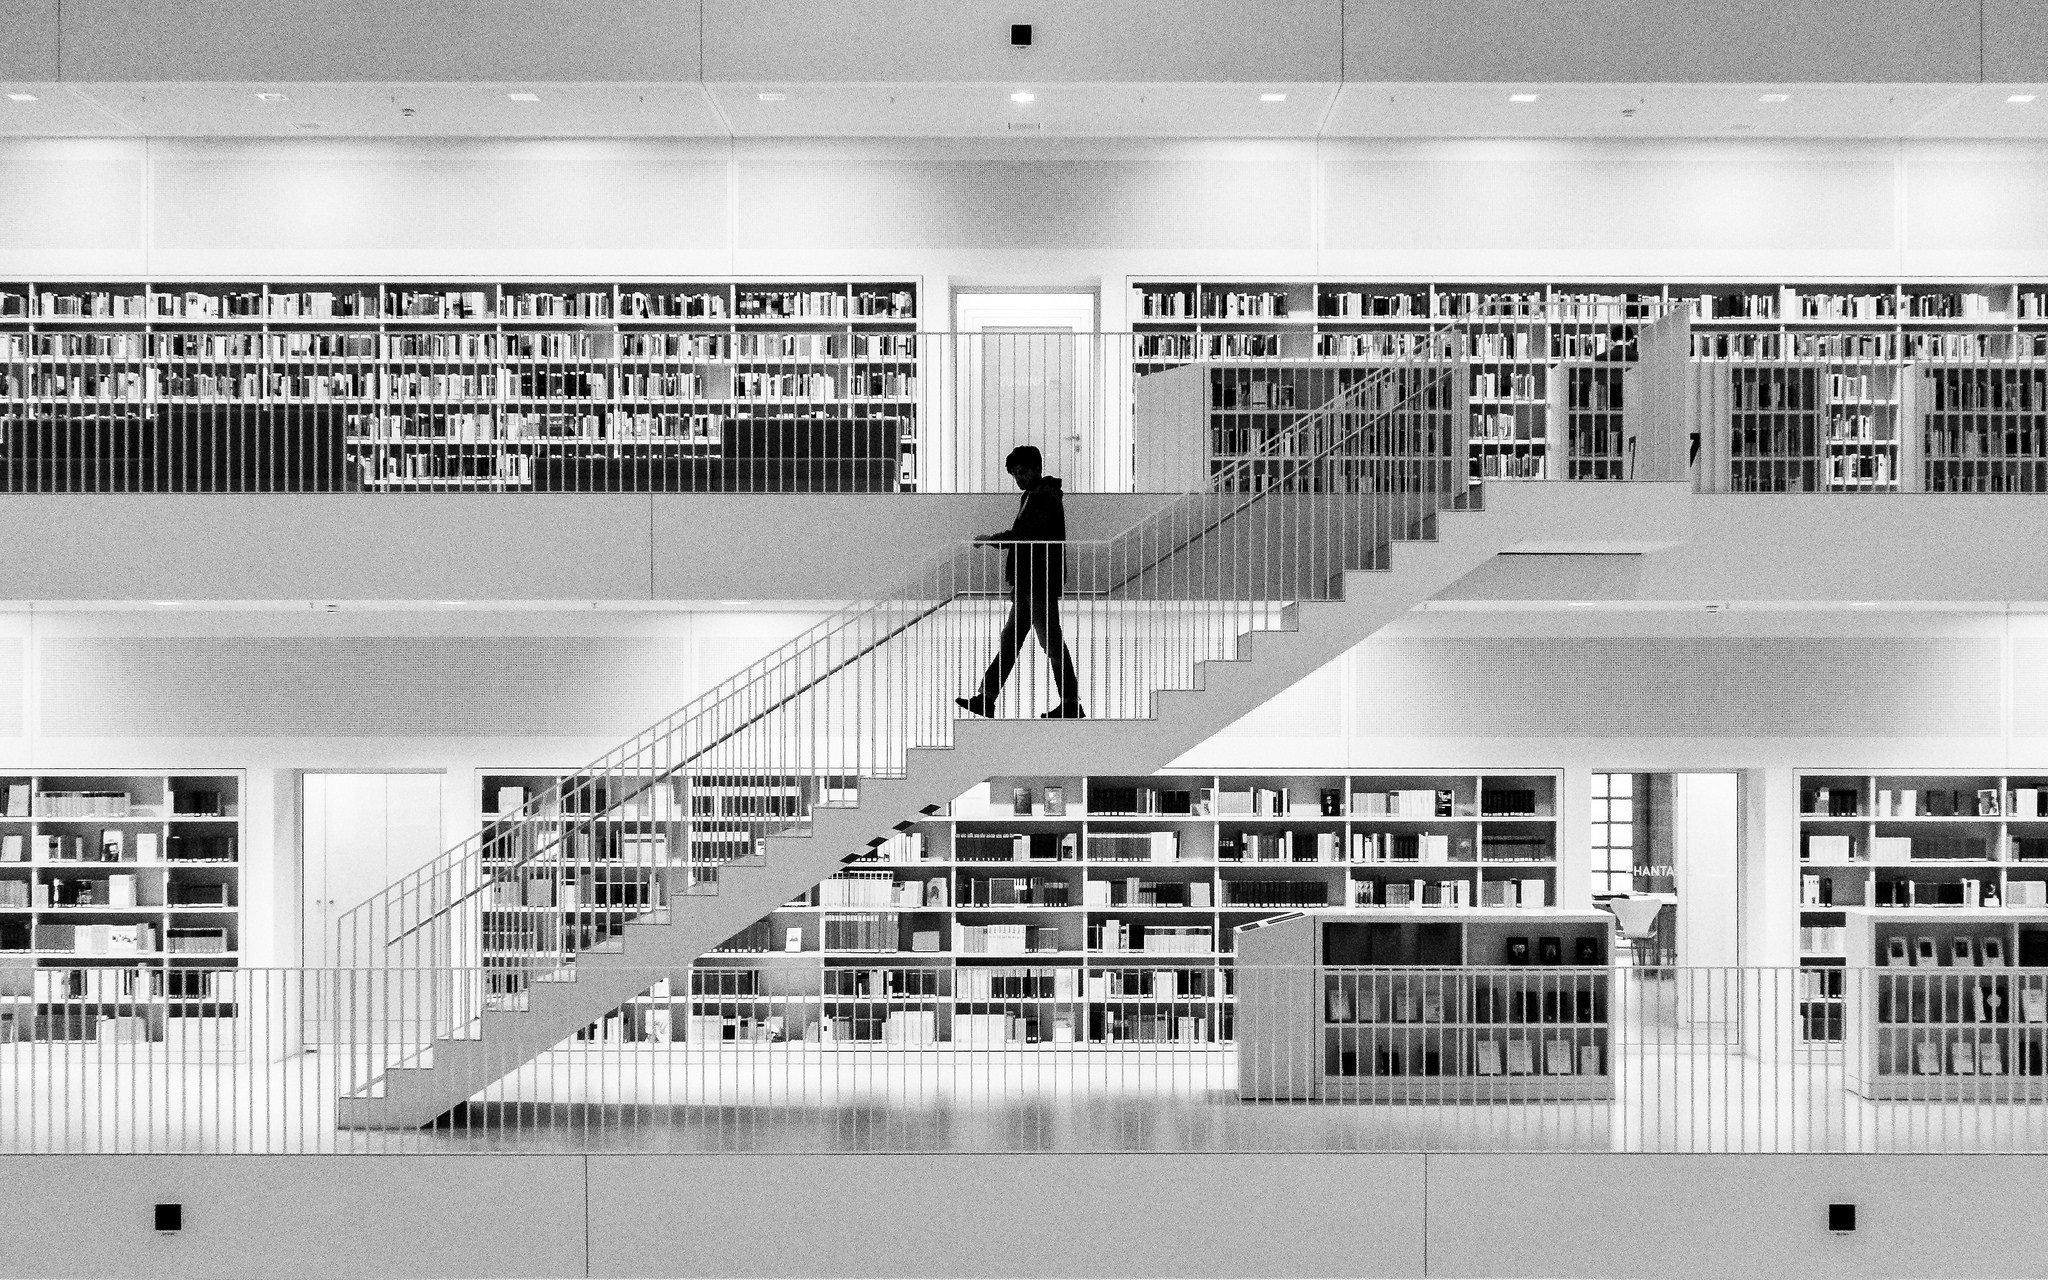 Using c library in c. Библиотека силуэт. Силуэт библиотеки здания. Библиотека архитектура белая. Человек на лестнице в библиотеке.